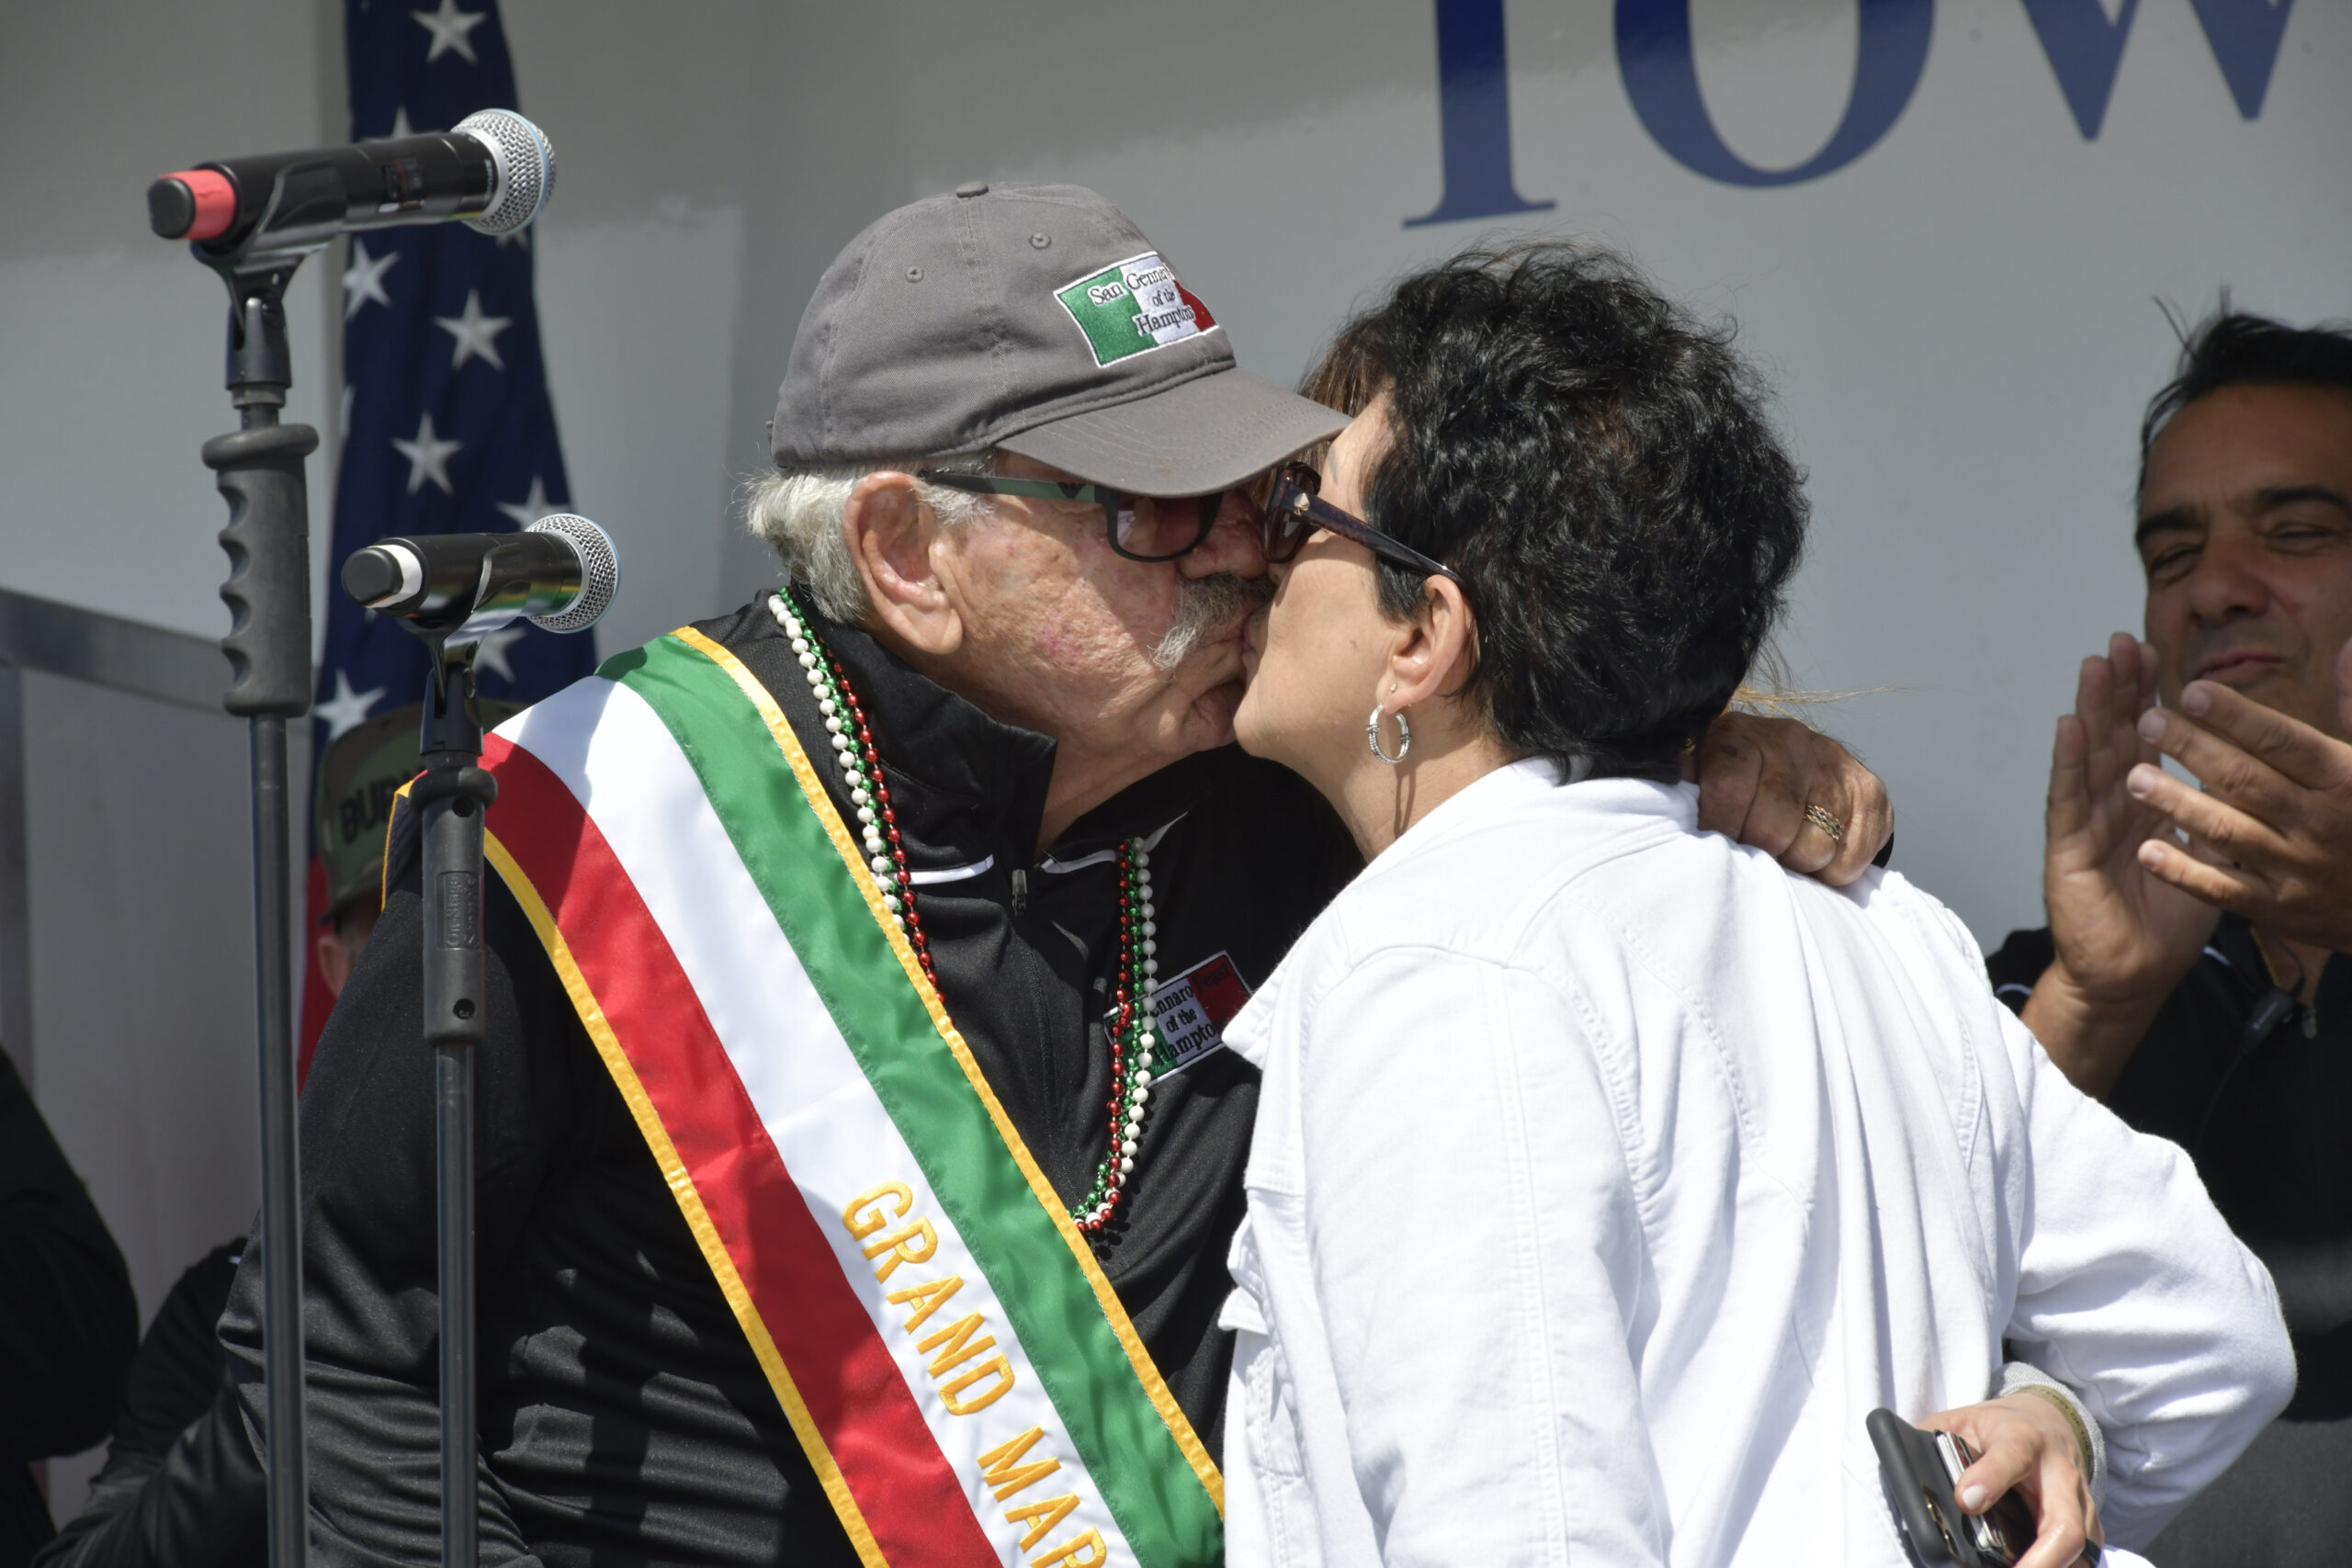 San Gennaro Grand Marshal Phil Forte kisses his wife, Carolyn at the San Gennaro Feast of Hamptons on Saturday,